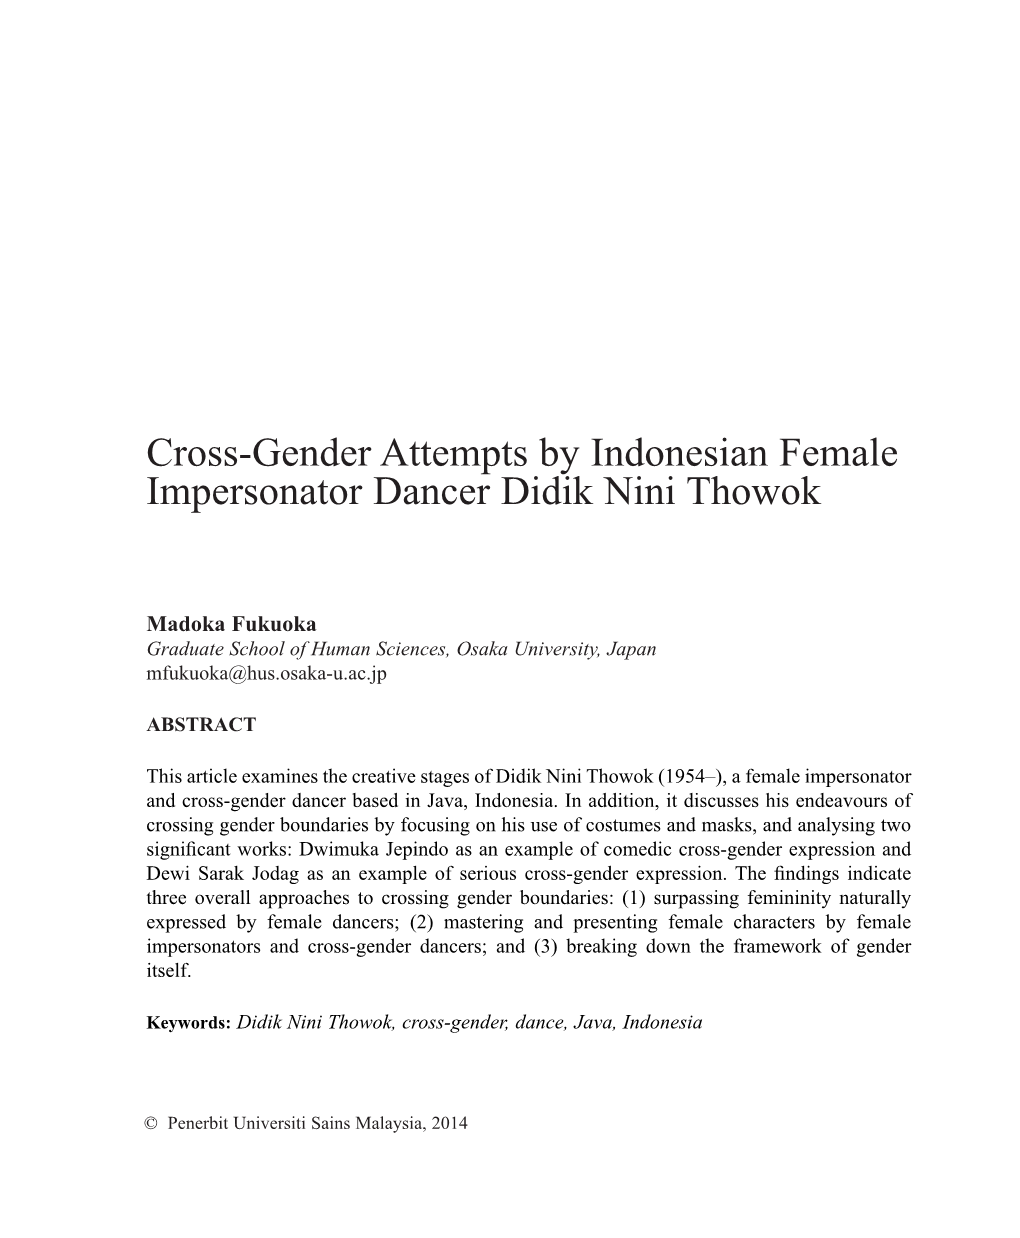 Cross-Gender Attempts by Indonesian Female Impersonator Dancer Didik Nini Thowok